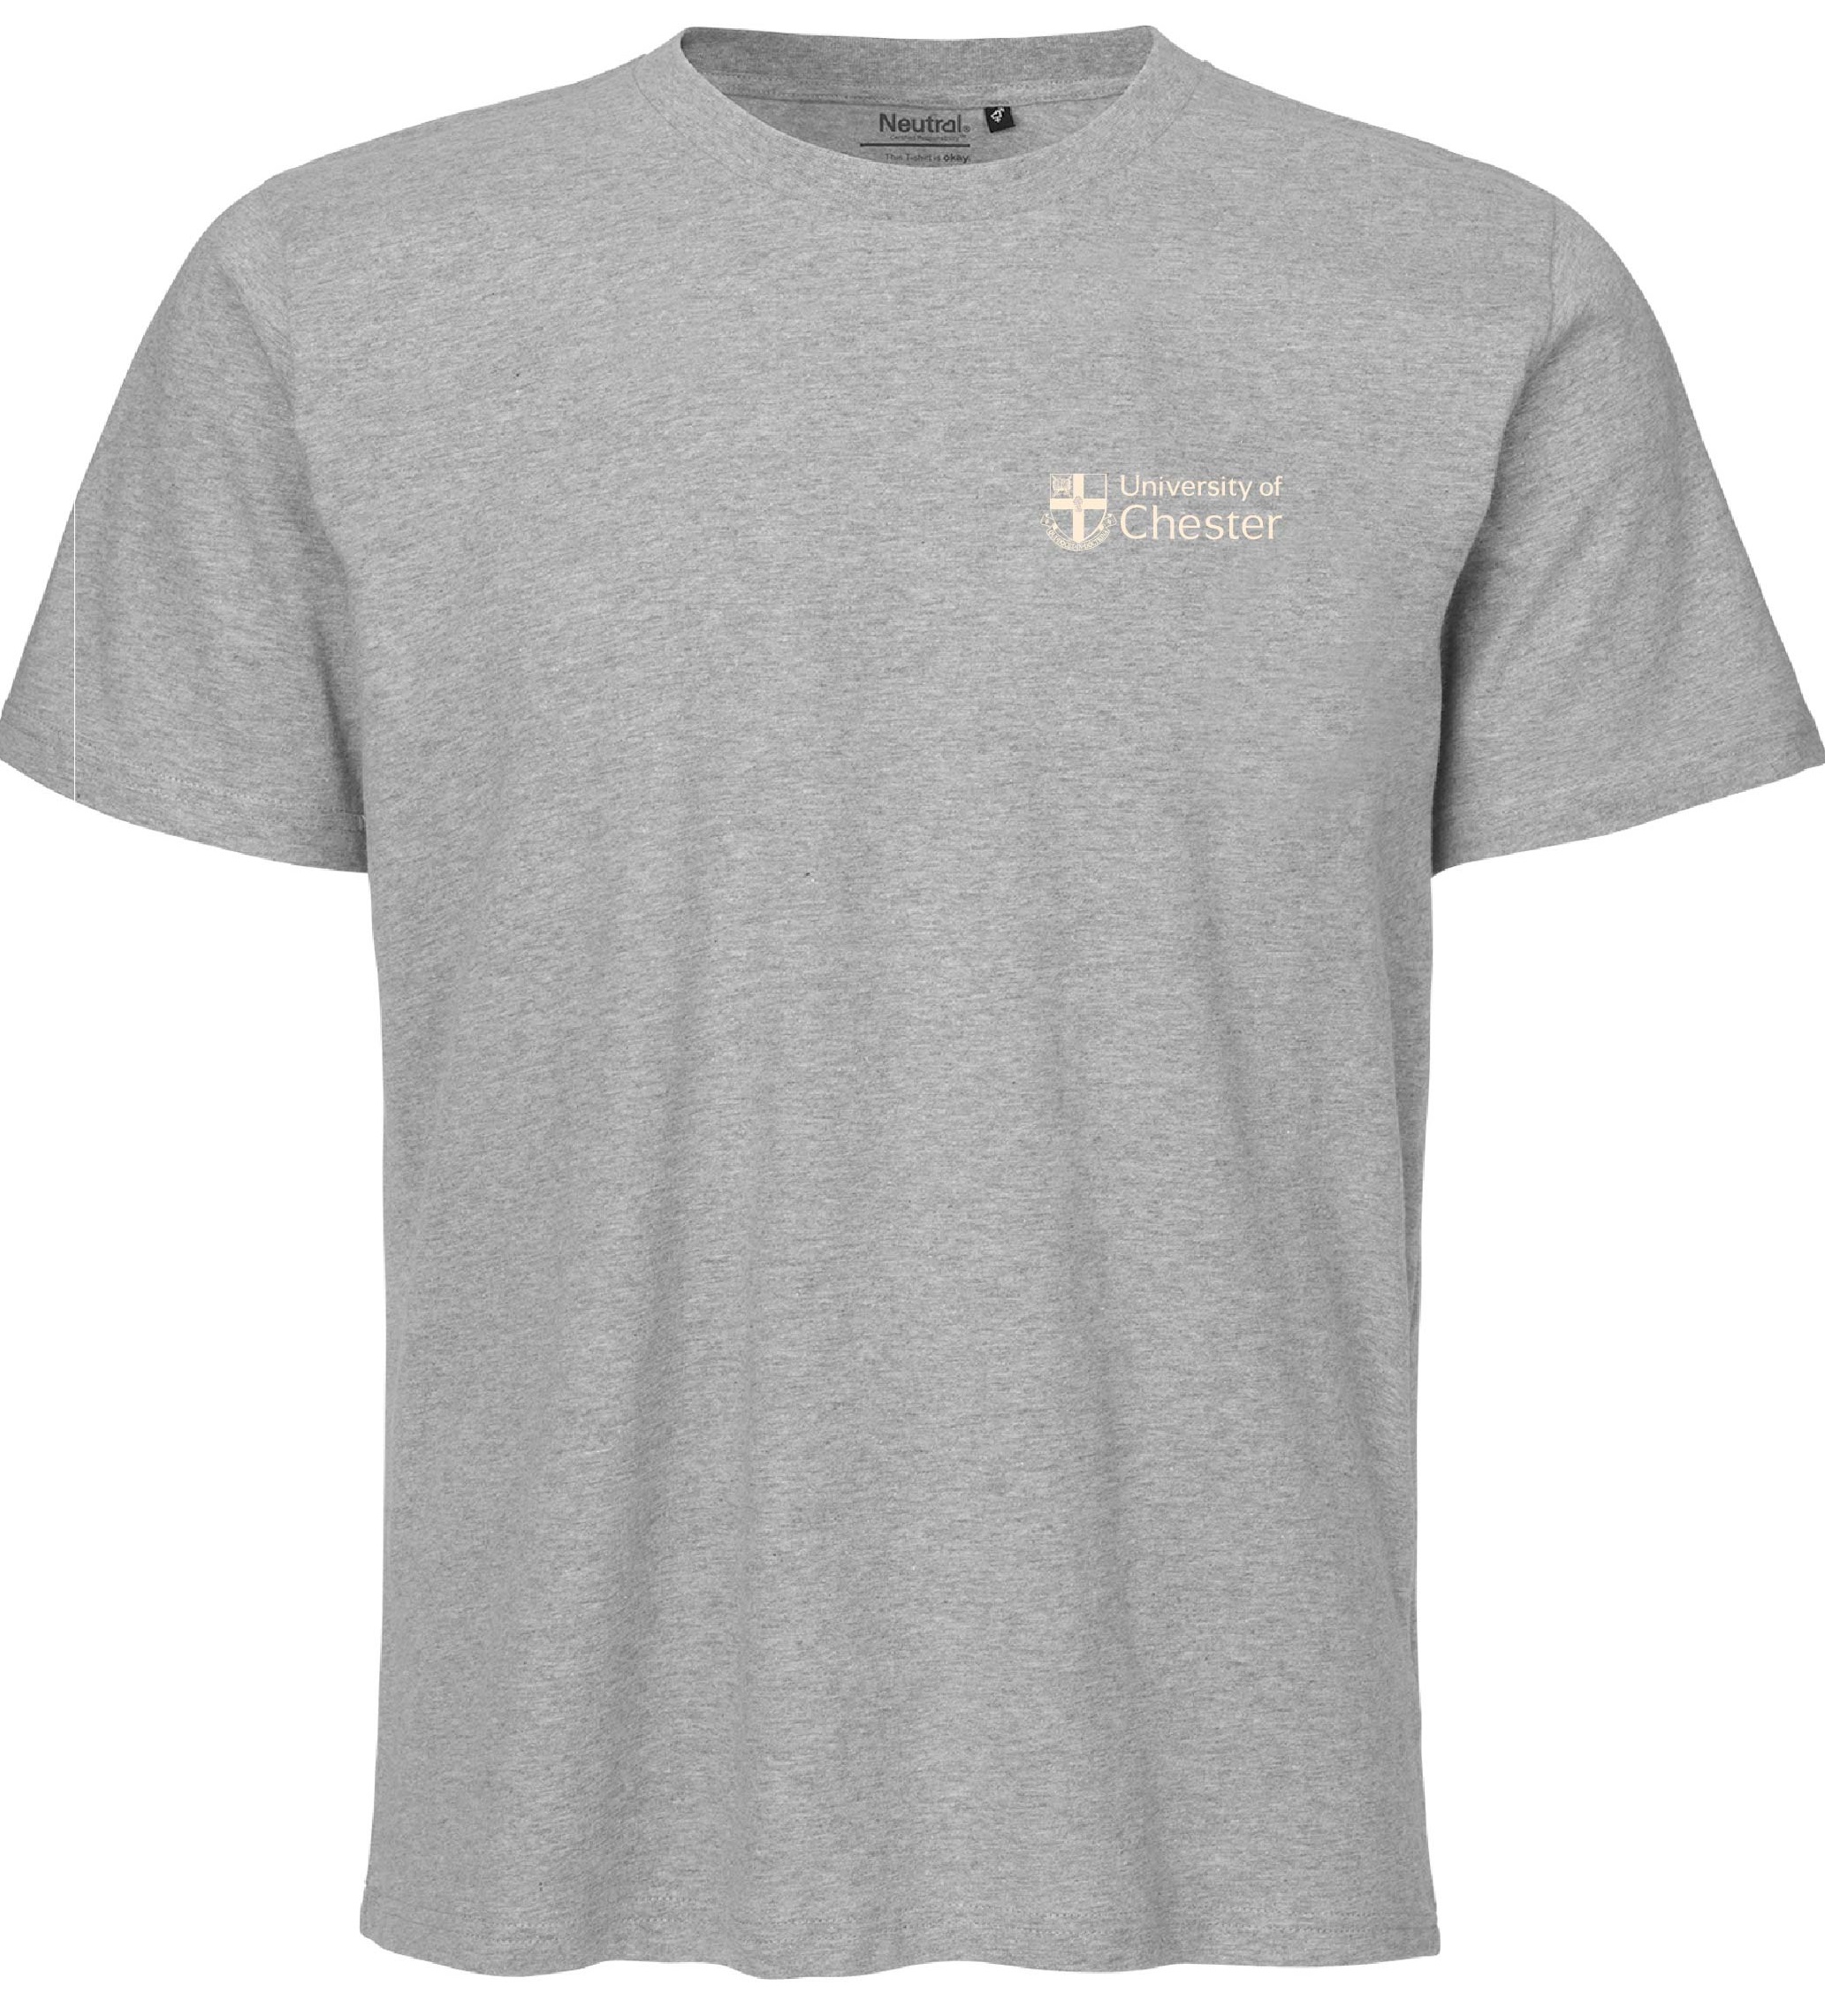 Neutral range - UoC T-Shirt - Grey - S